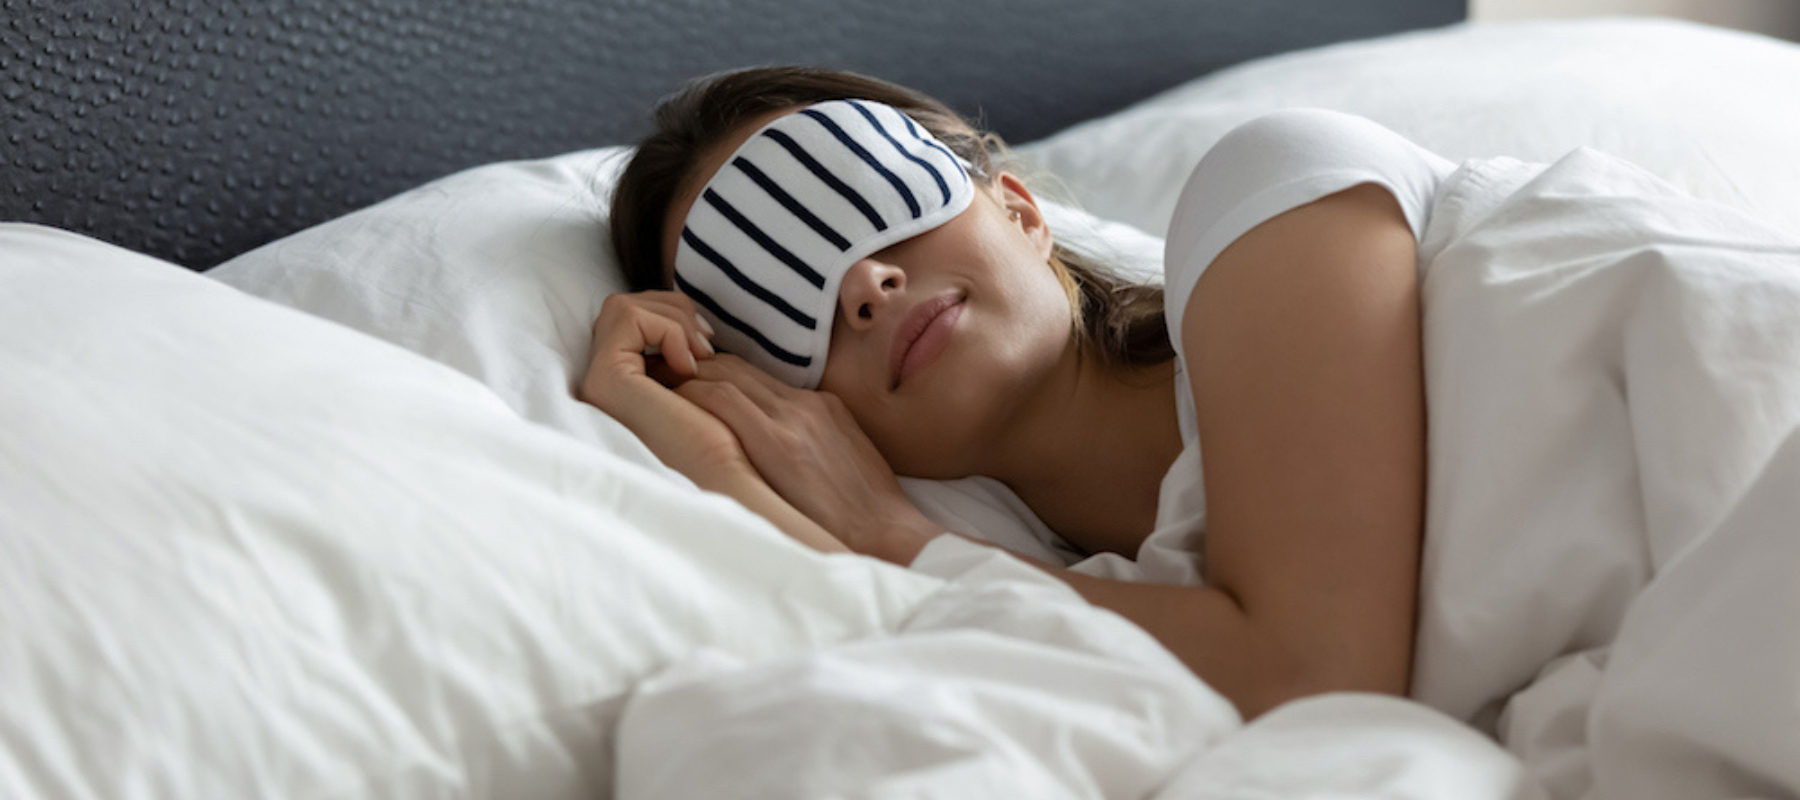 Different bedsheet types for optimal sleep comfort